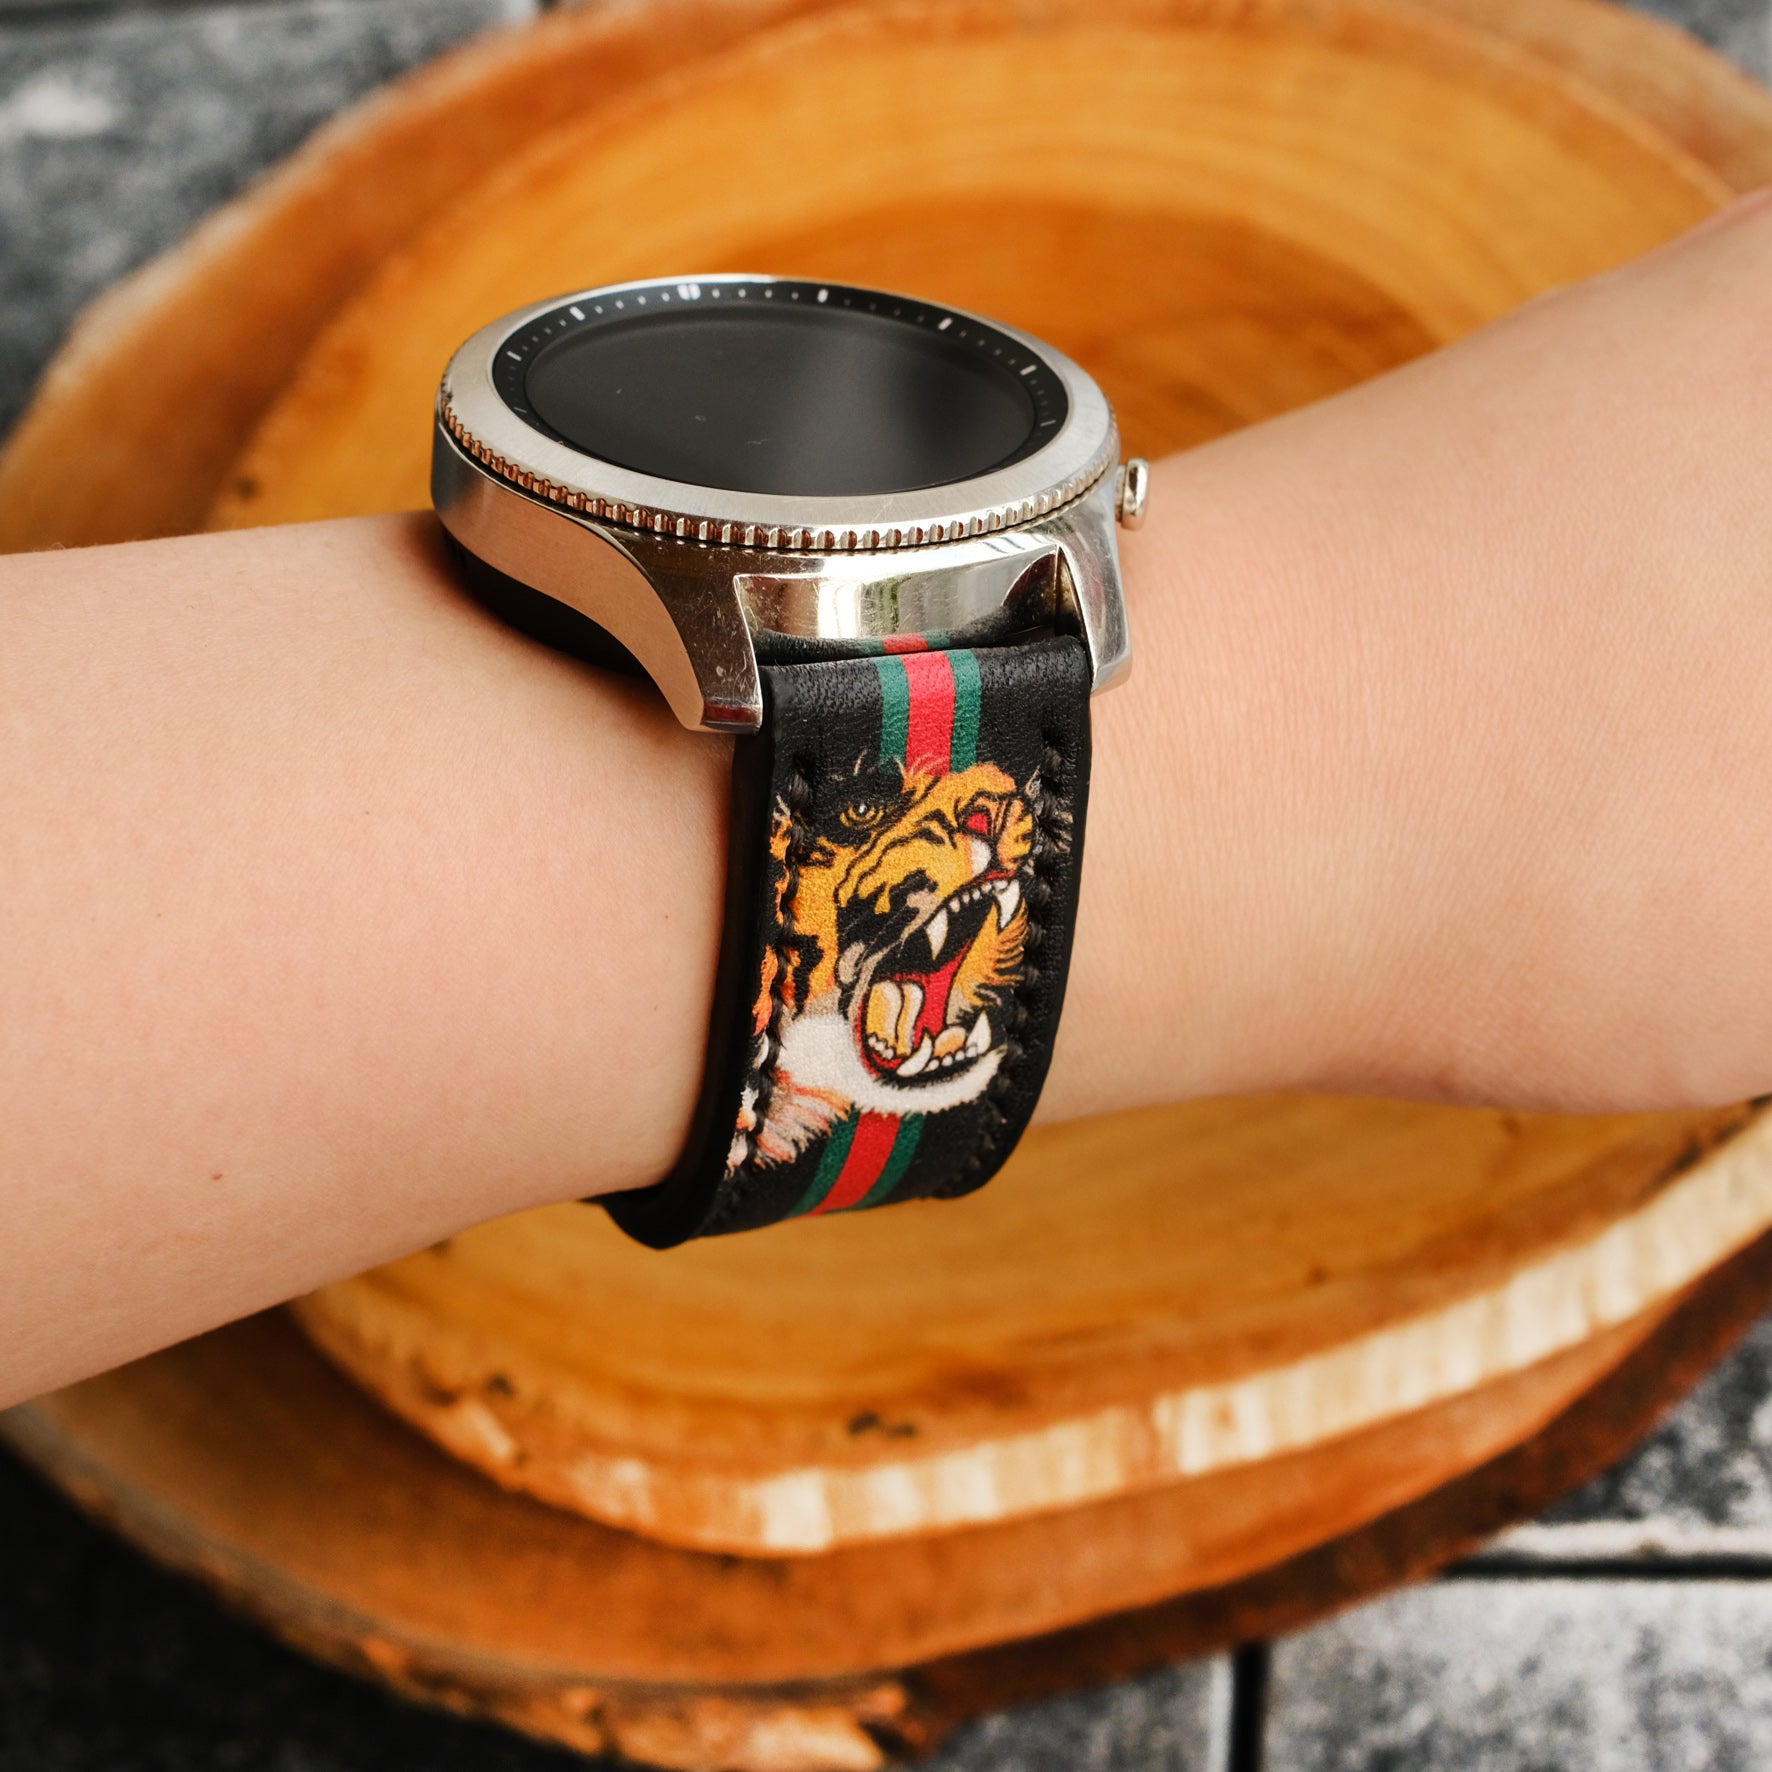 Gucci Watch Band For Samsung Galaxy Watch